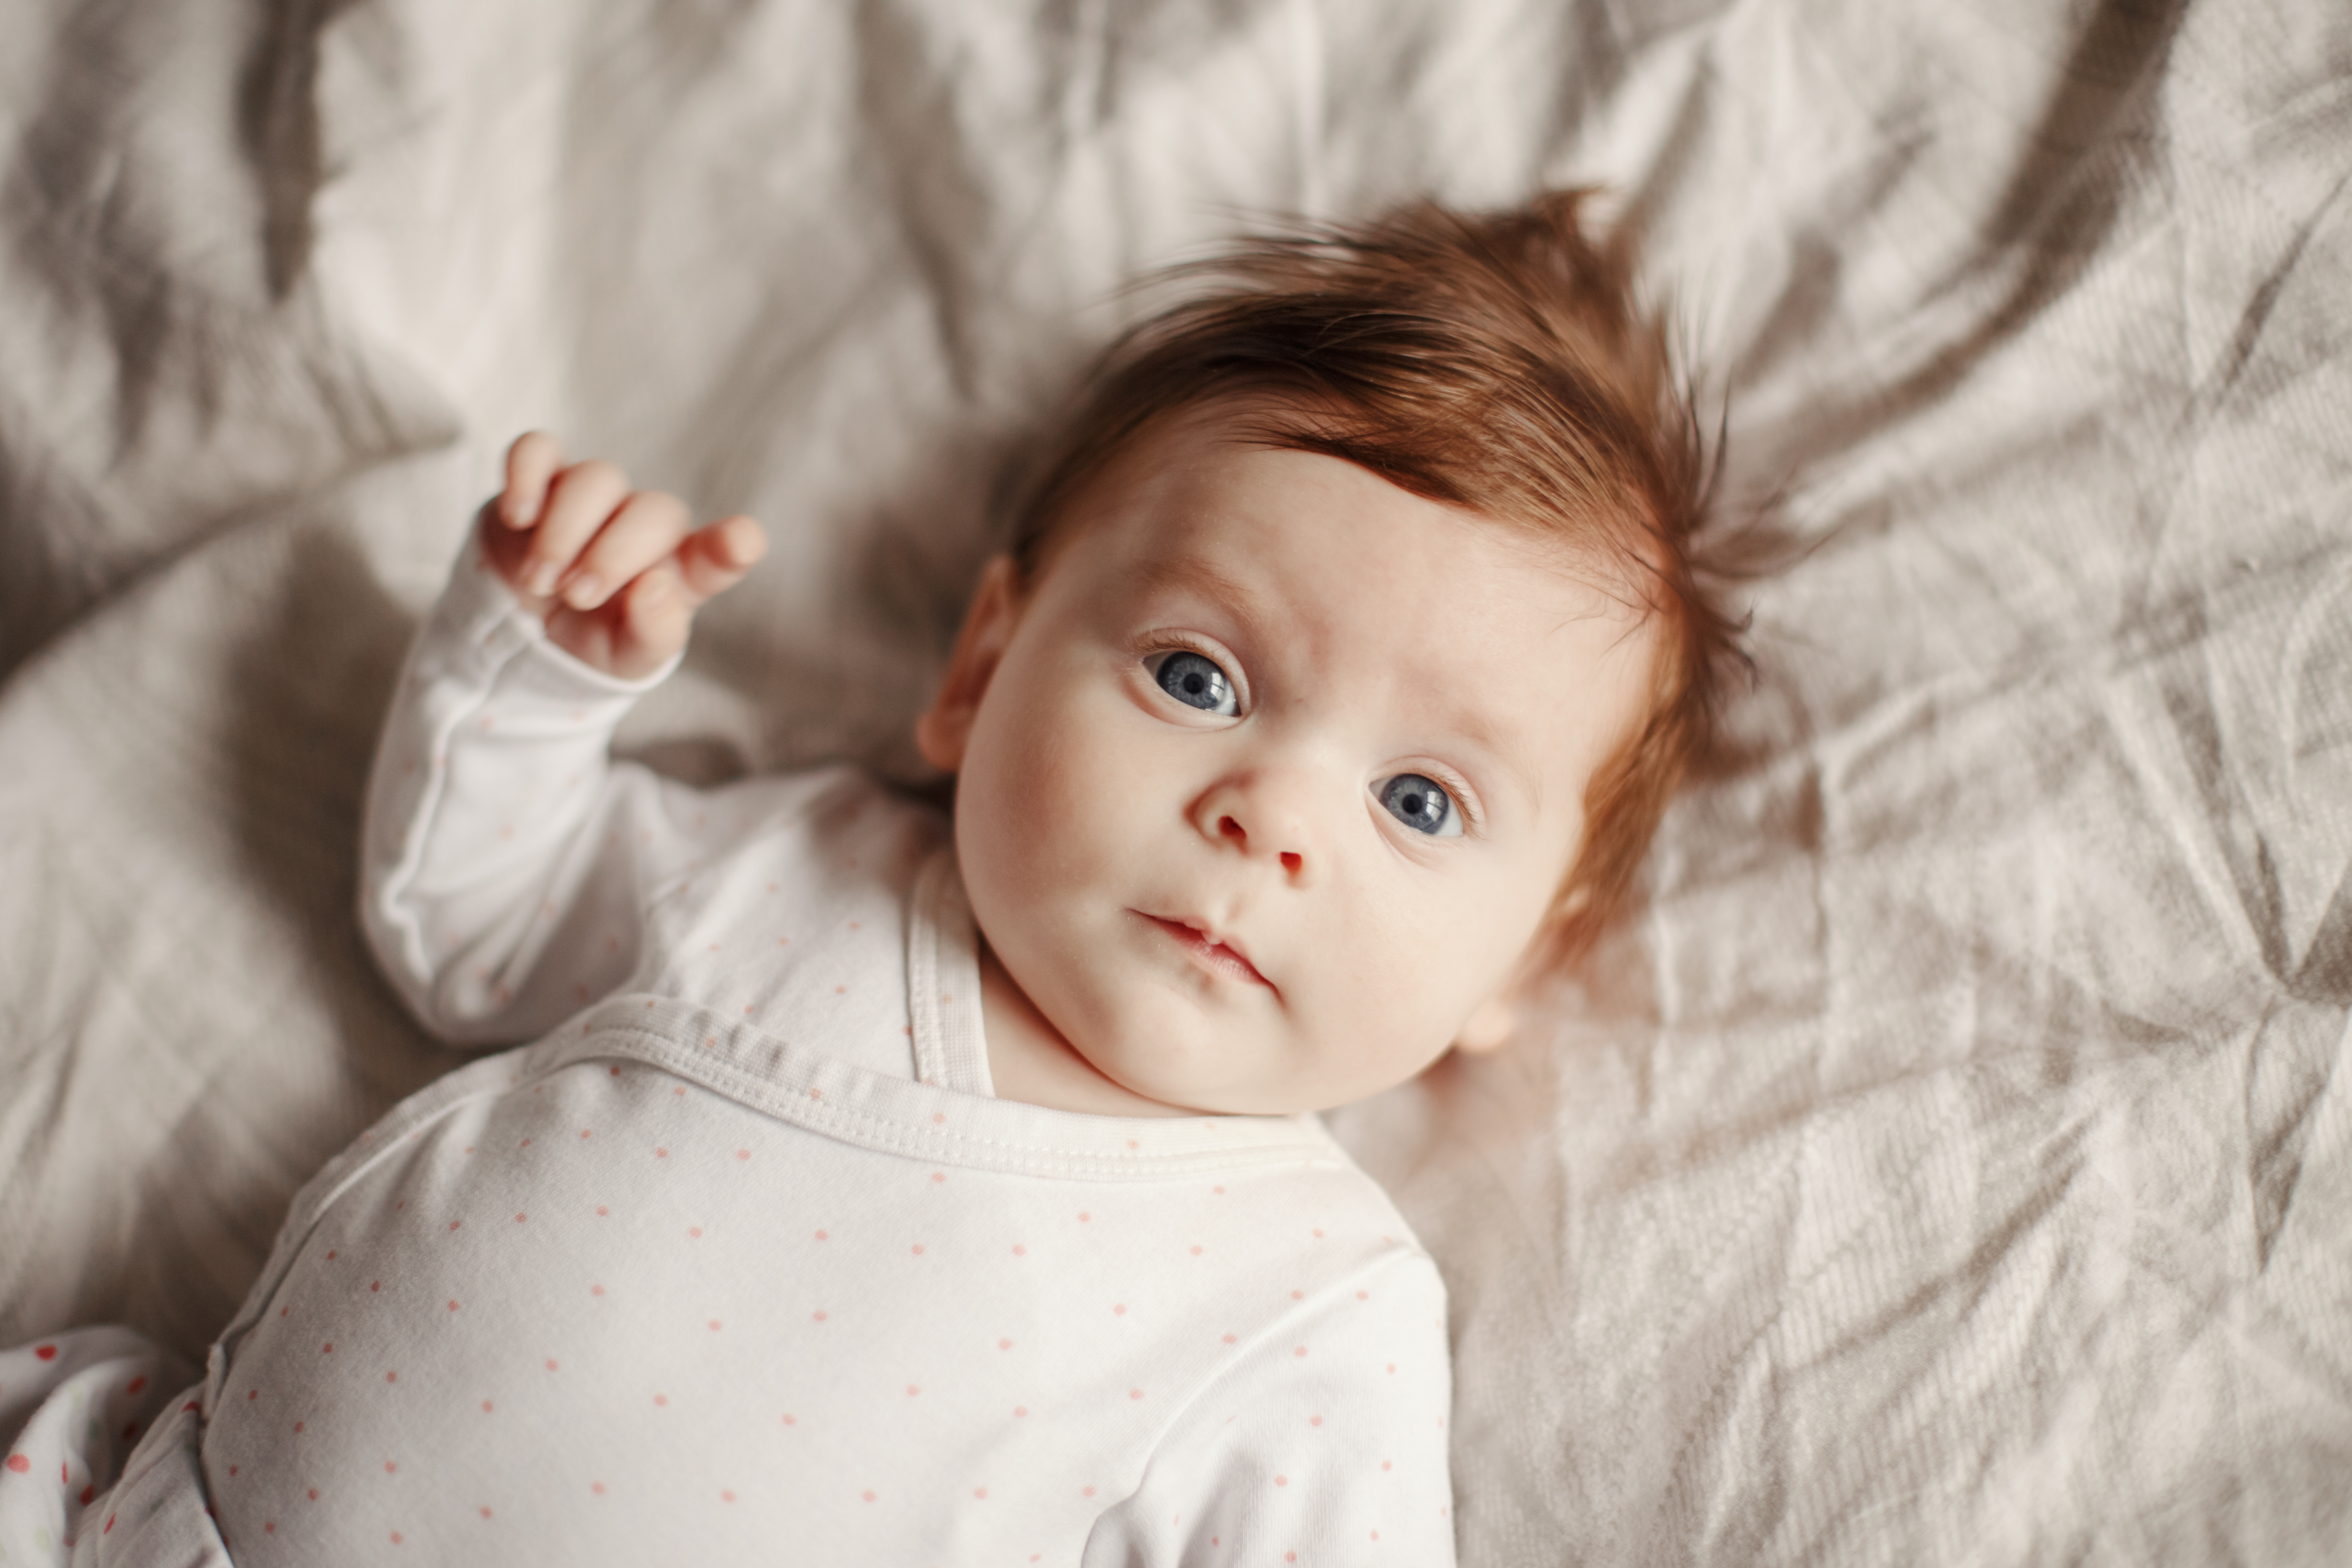 Newborn child with red hair | Source: Shutterstock